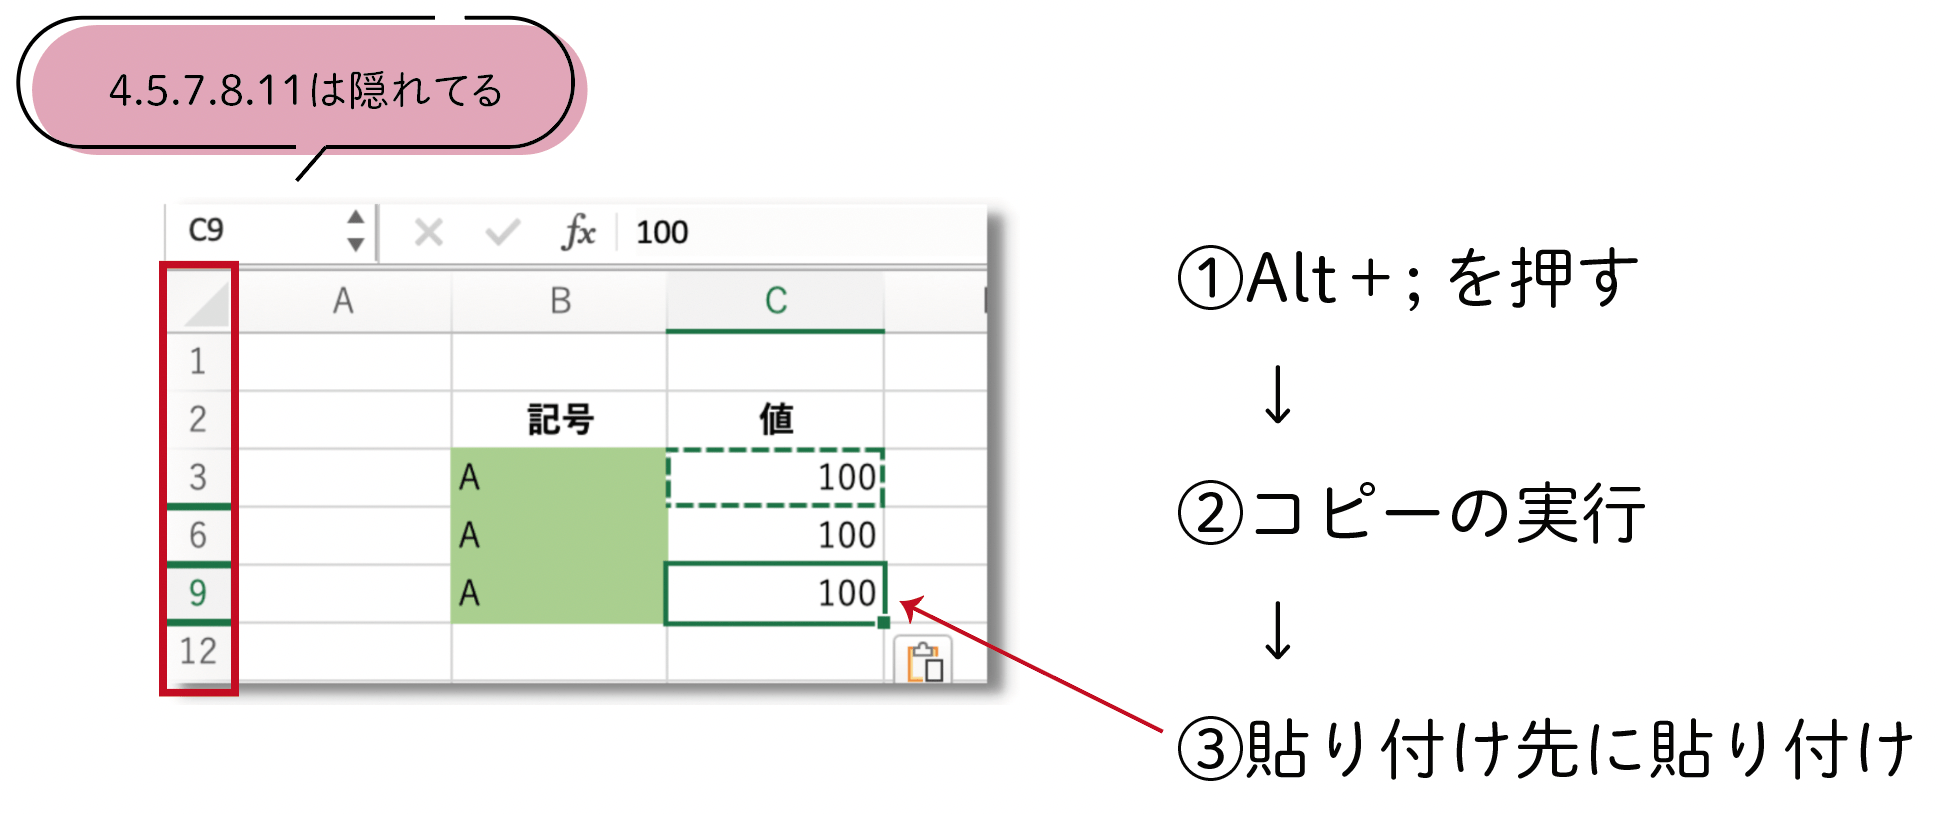 【Excel】便利な Altショートカットキー5選①Alt＋;を押す
　↓
②コピーの実行
　↓
③貼り付け先に貼り付け